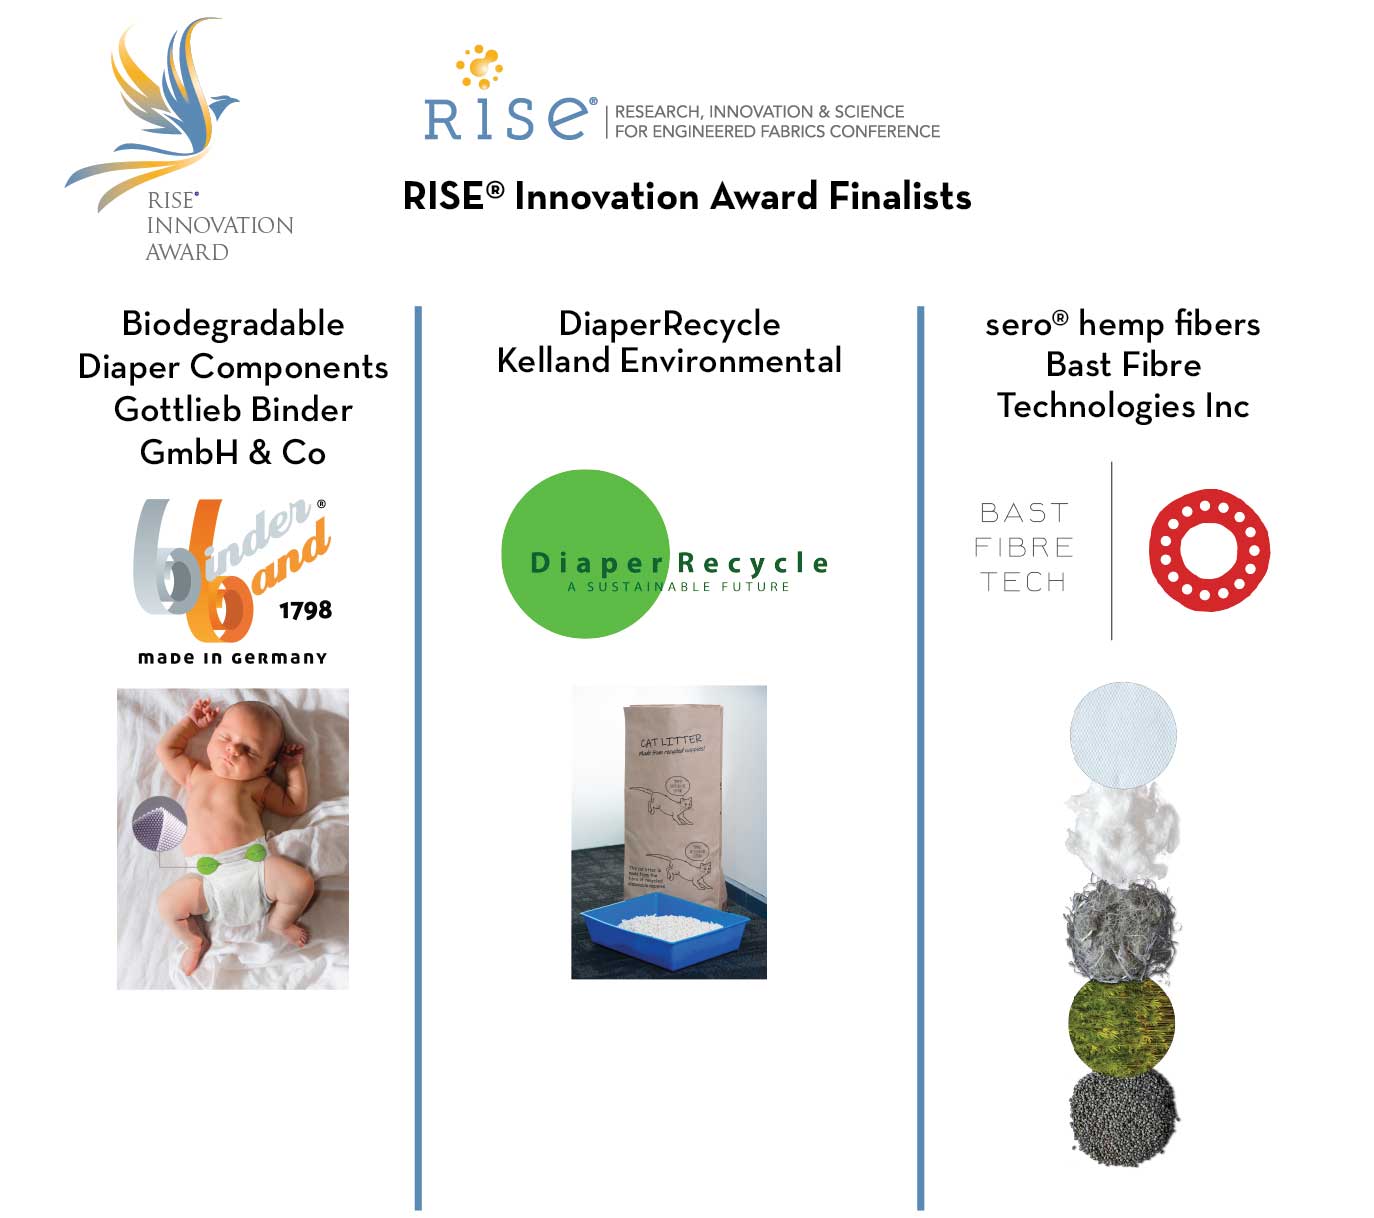 RISE Innovation Award